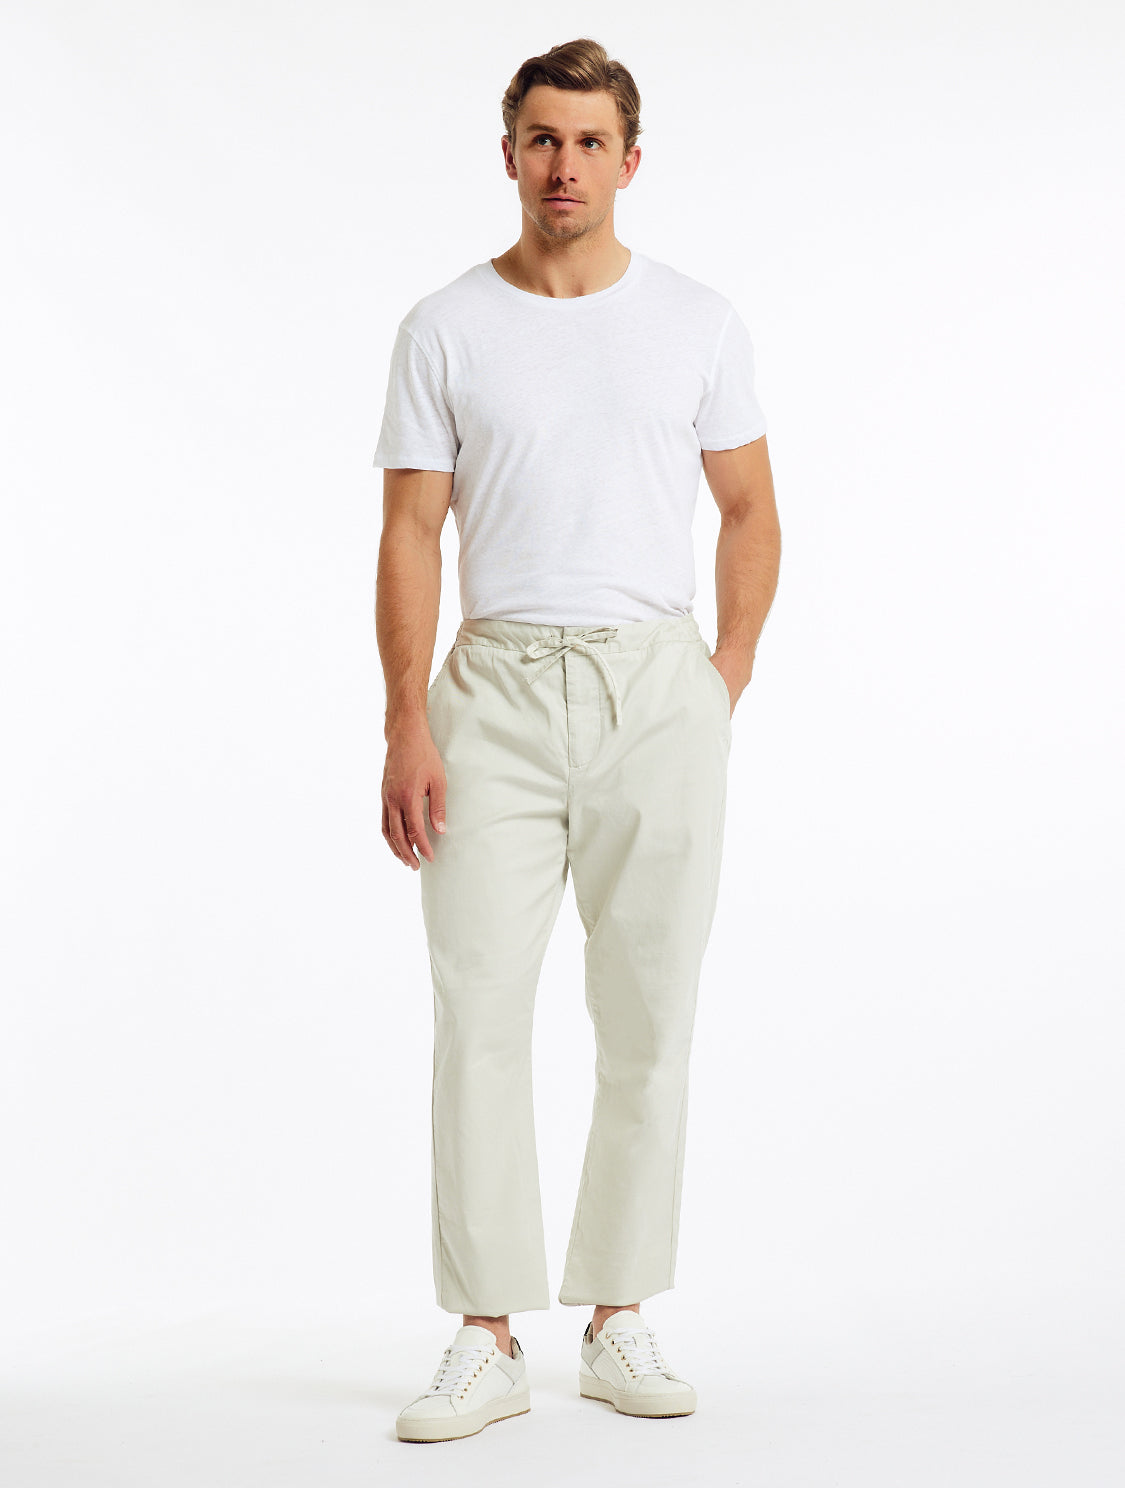 Louis Vuitton Chino Pants Ocean. Size 42